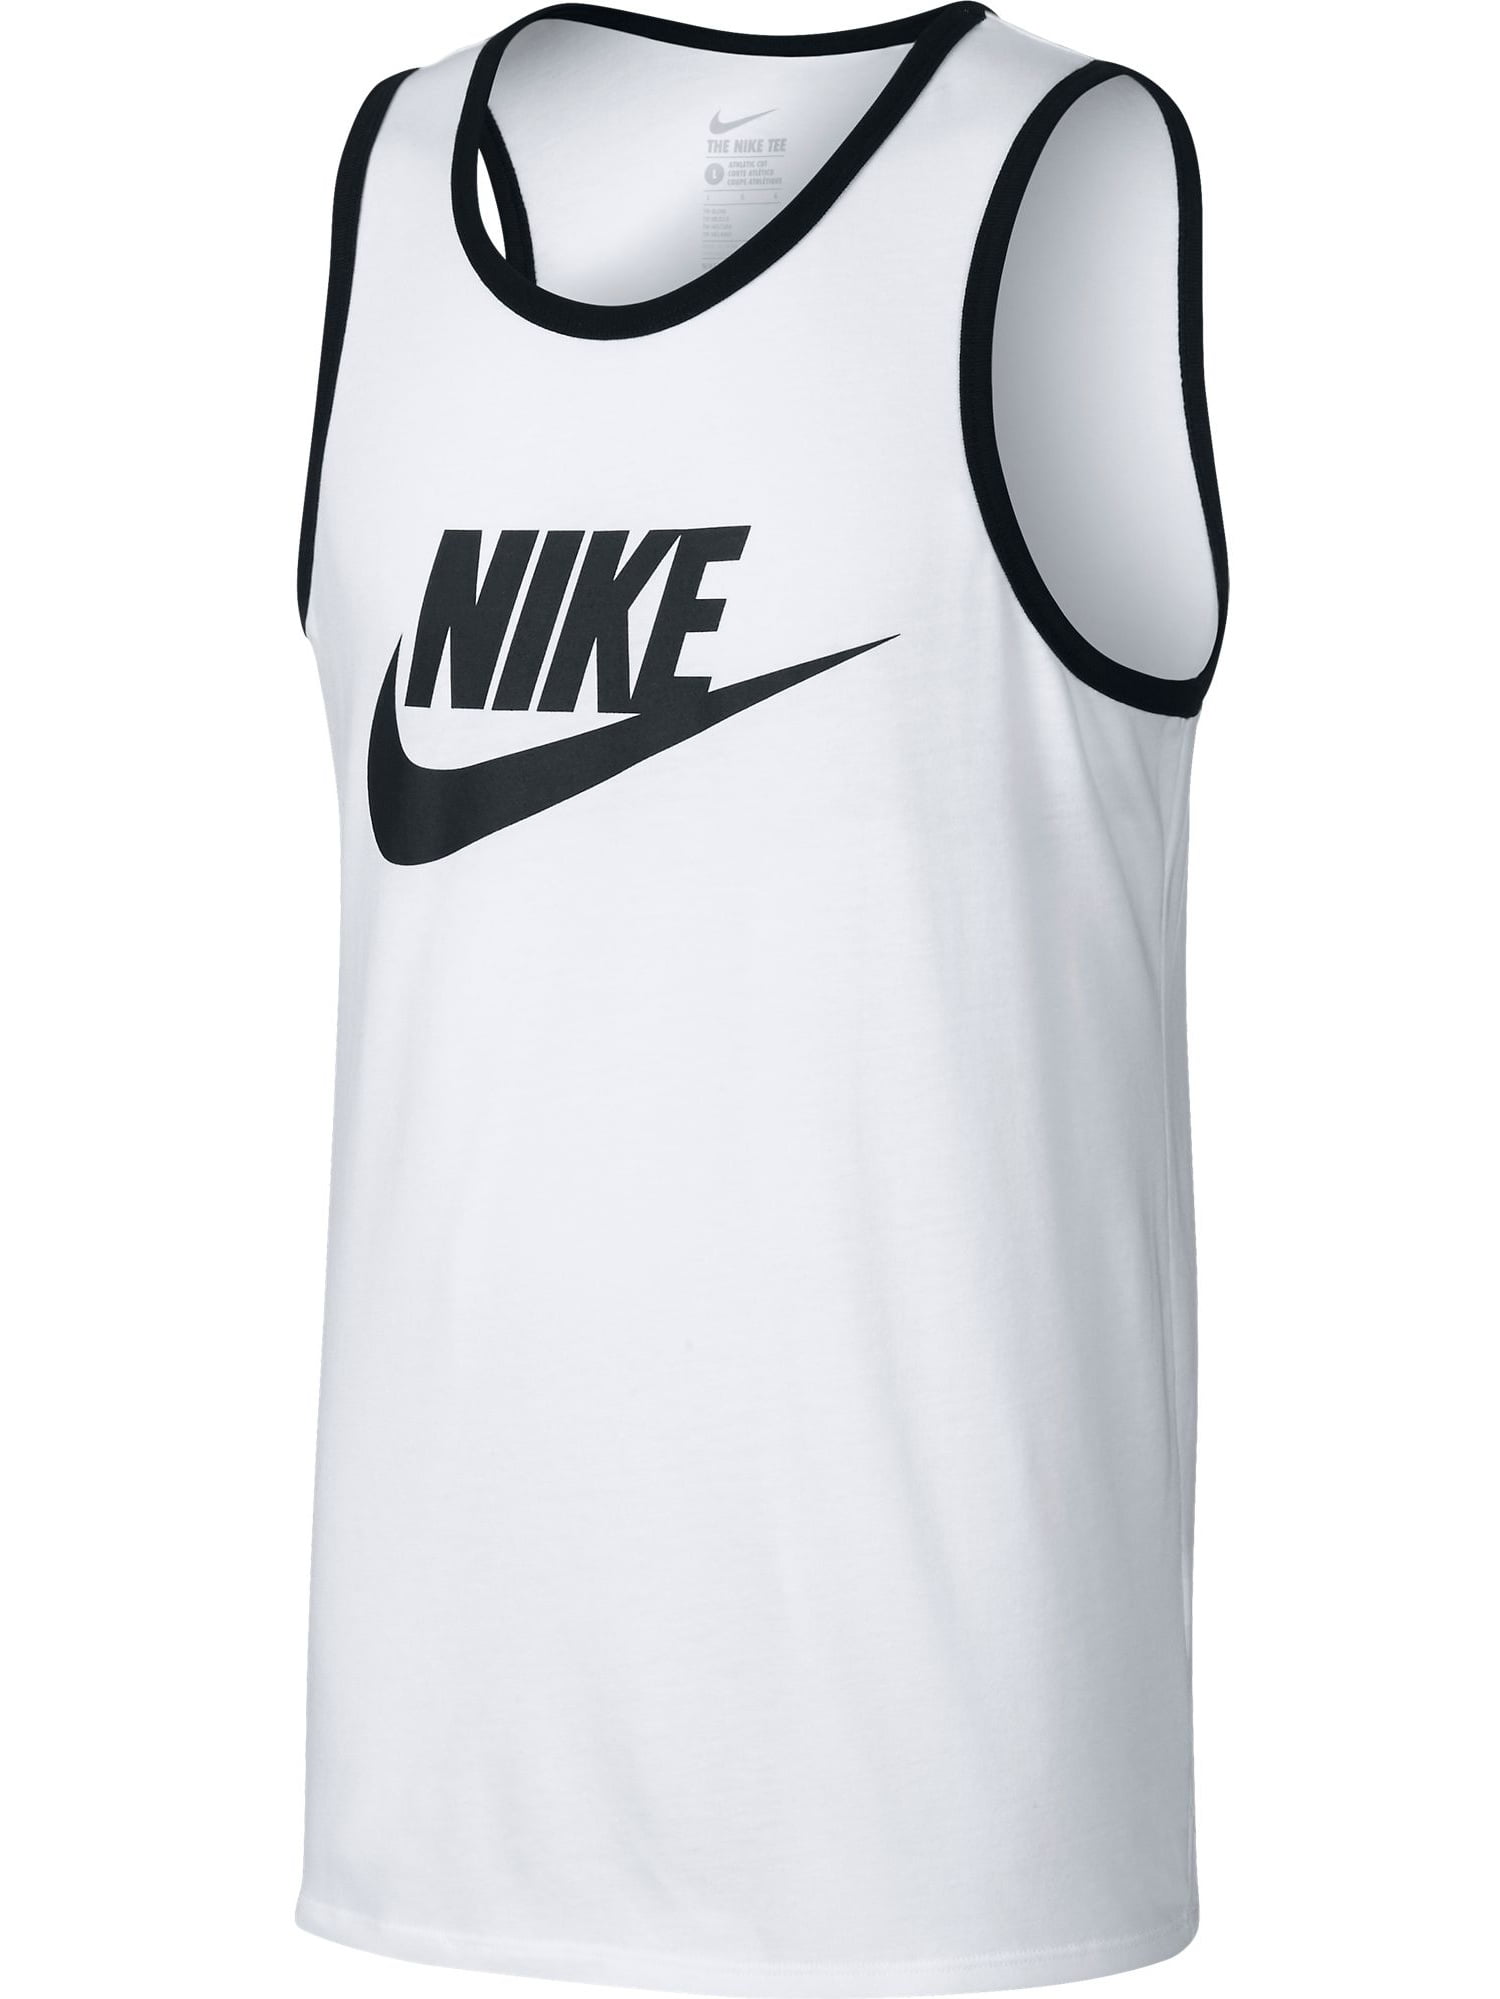 átomo Máxima acuerdo Nike ACE Logo Men's Tank Top Athletic White/Black 779234-100 - Walmart.com